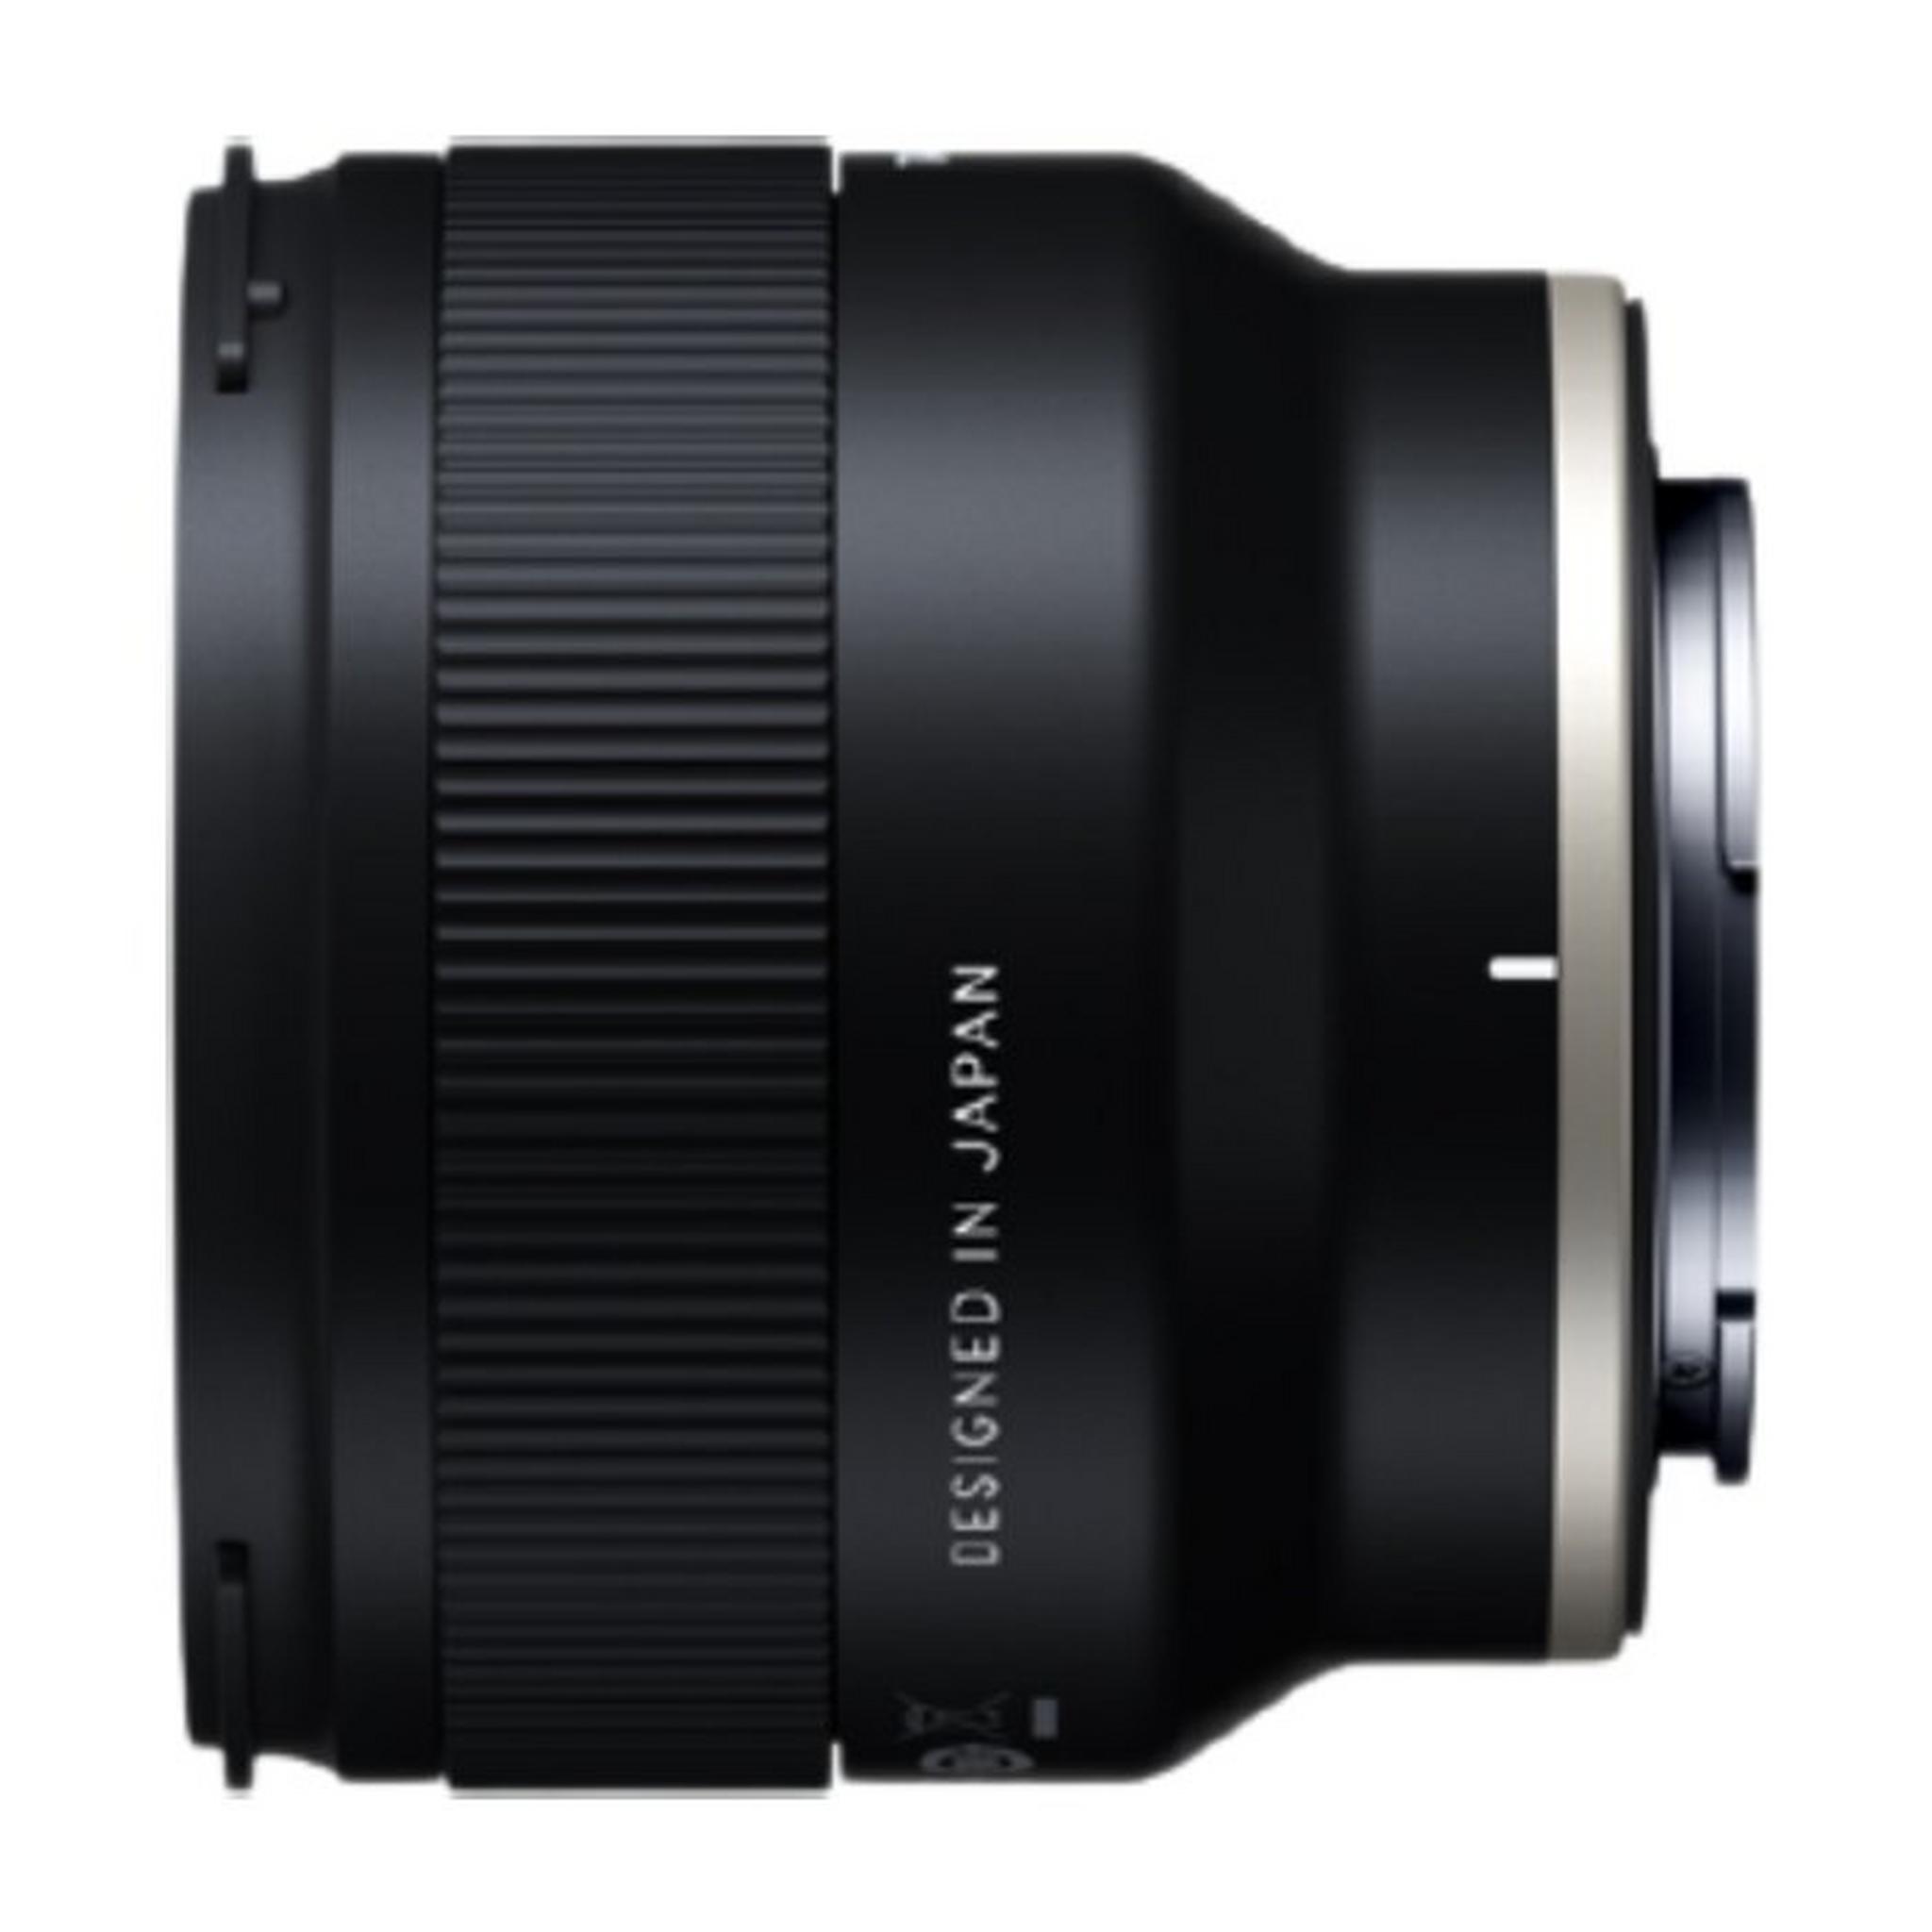 Tamron 35mm f/2.8 Di III OSD M 1:2 Sony E Lens